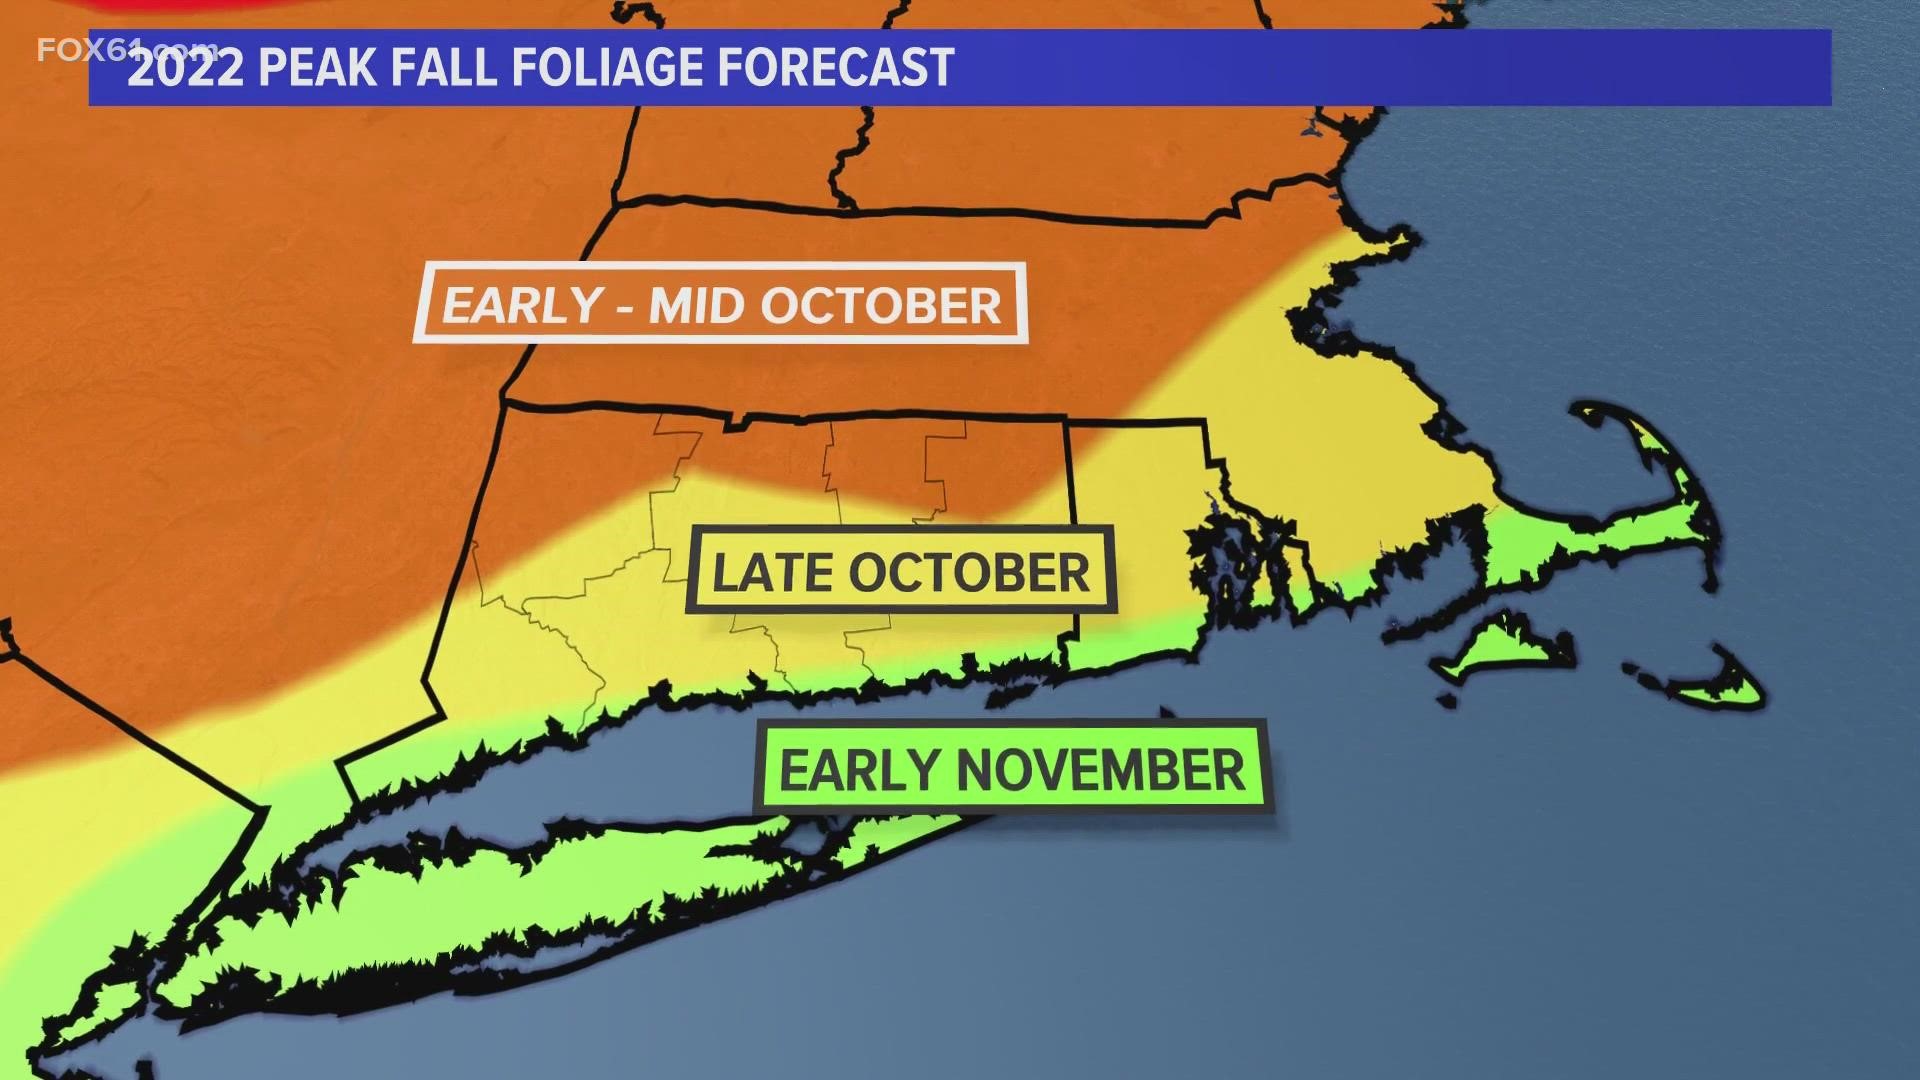 New England's foliage forecast for Fall 2022